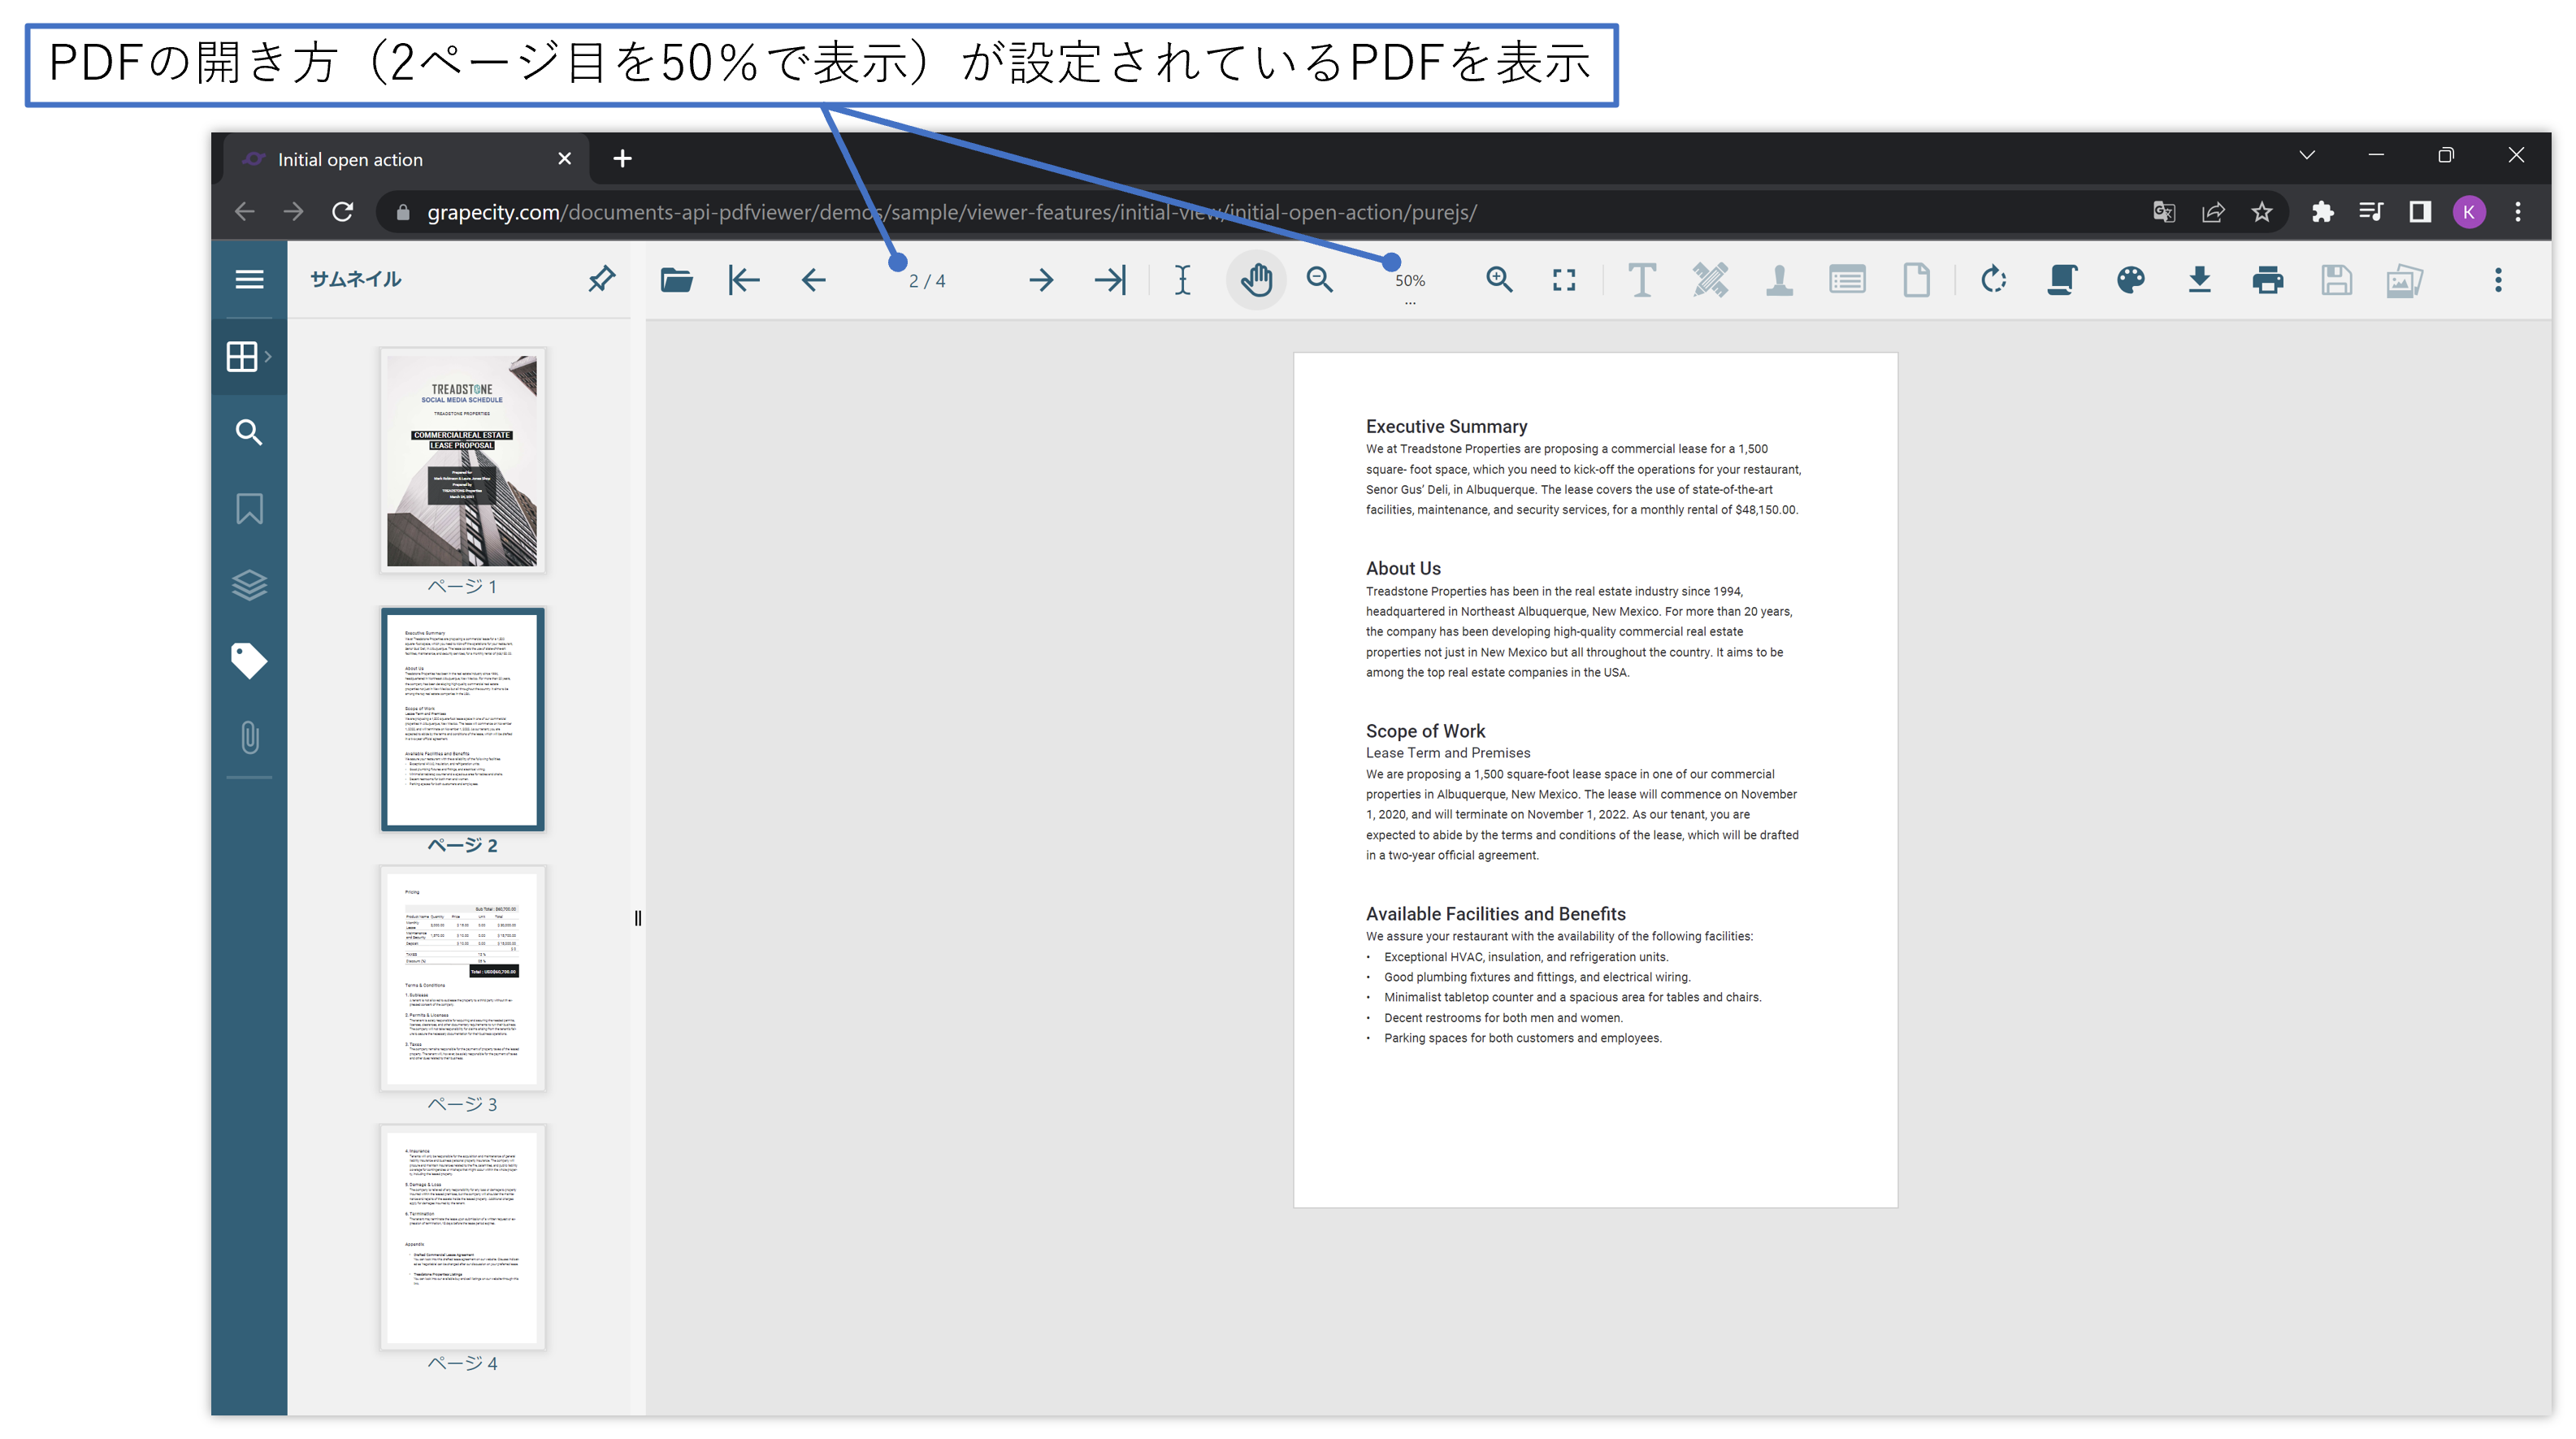 PDFの開き方設定を反映して表示